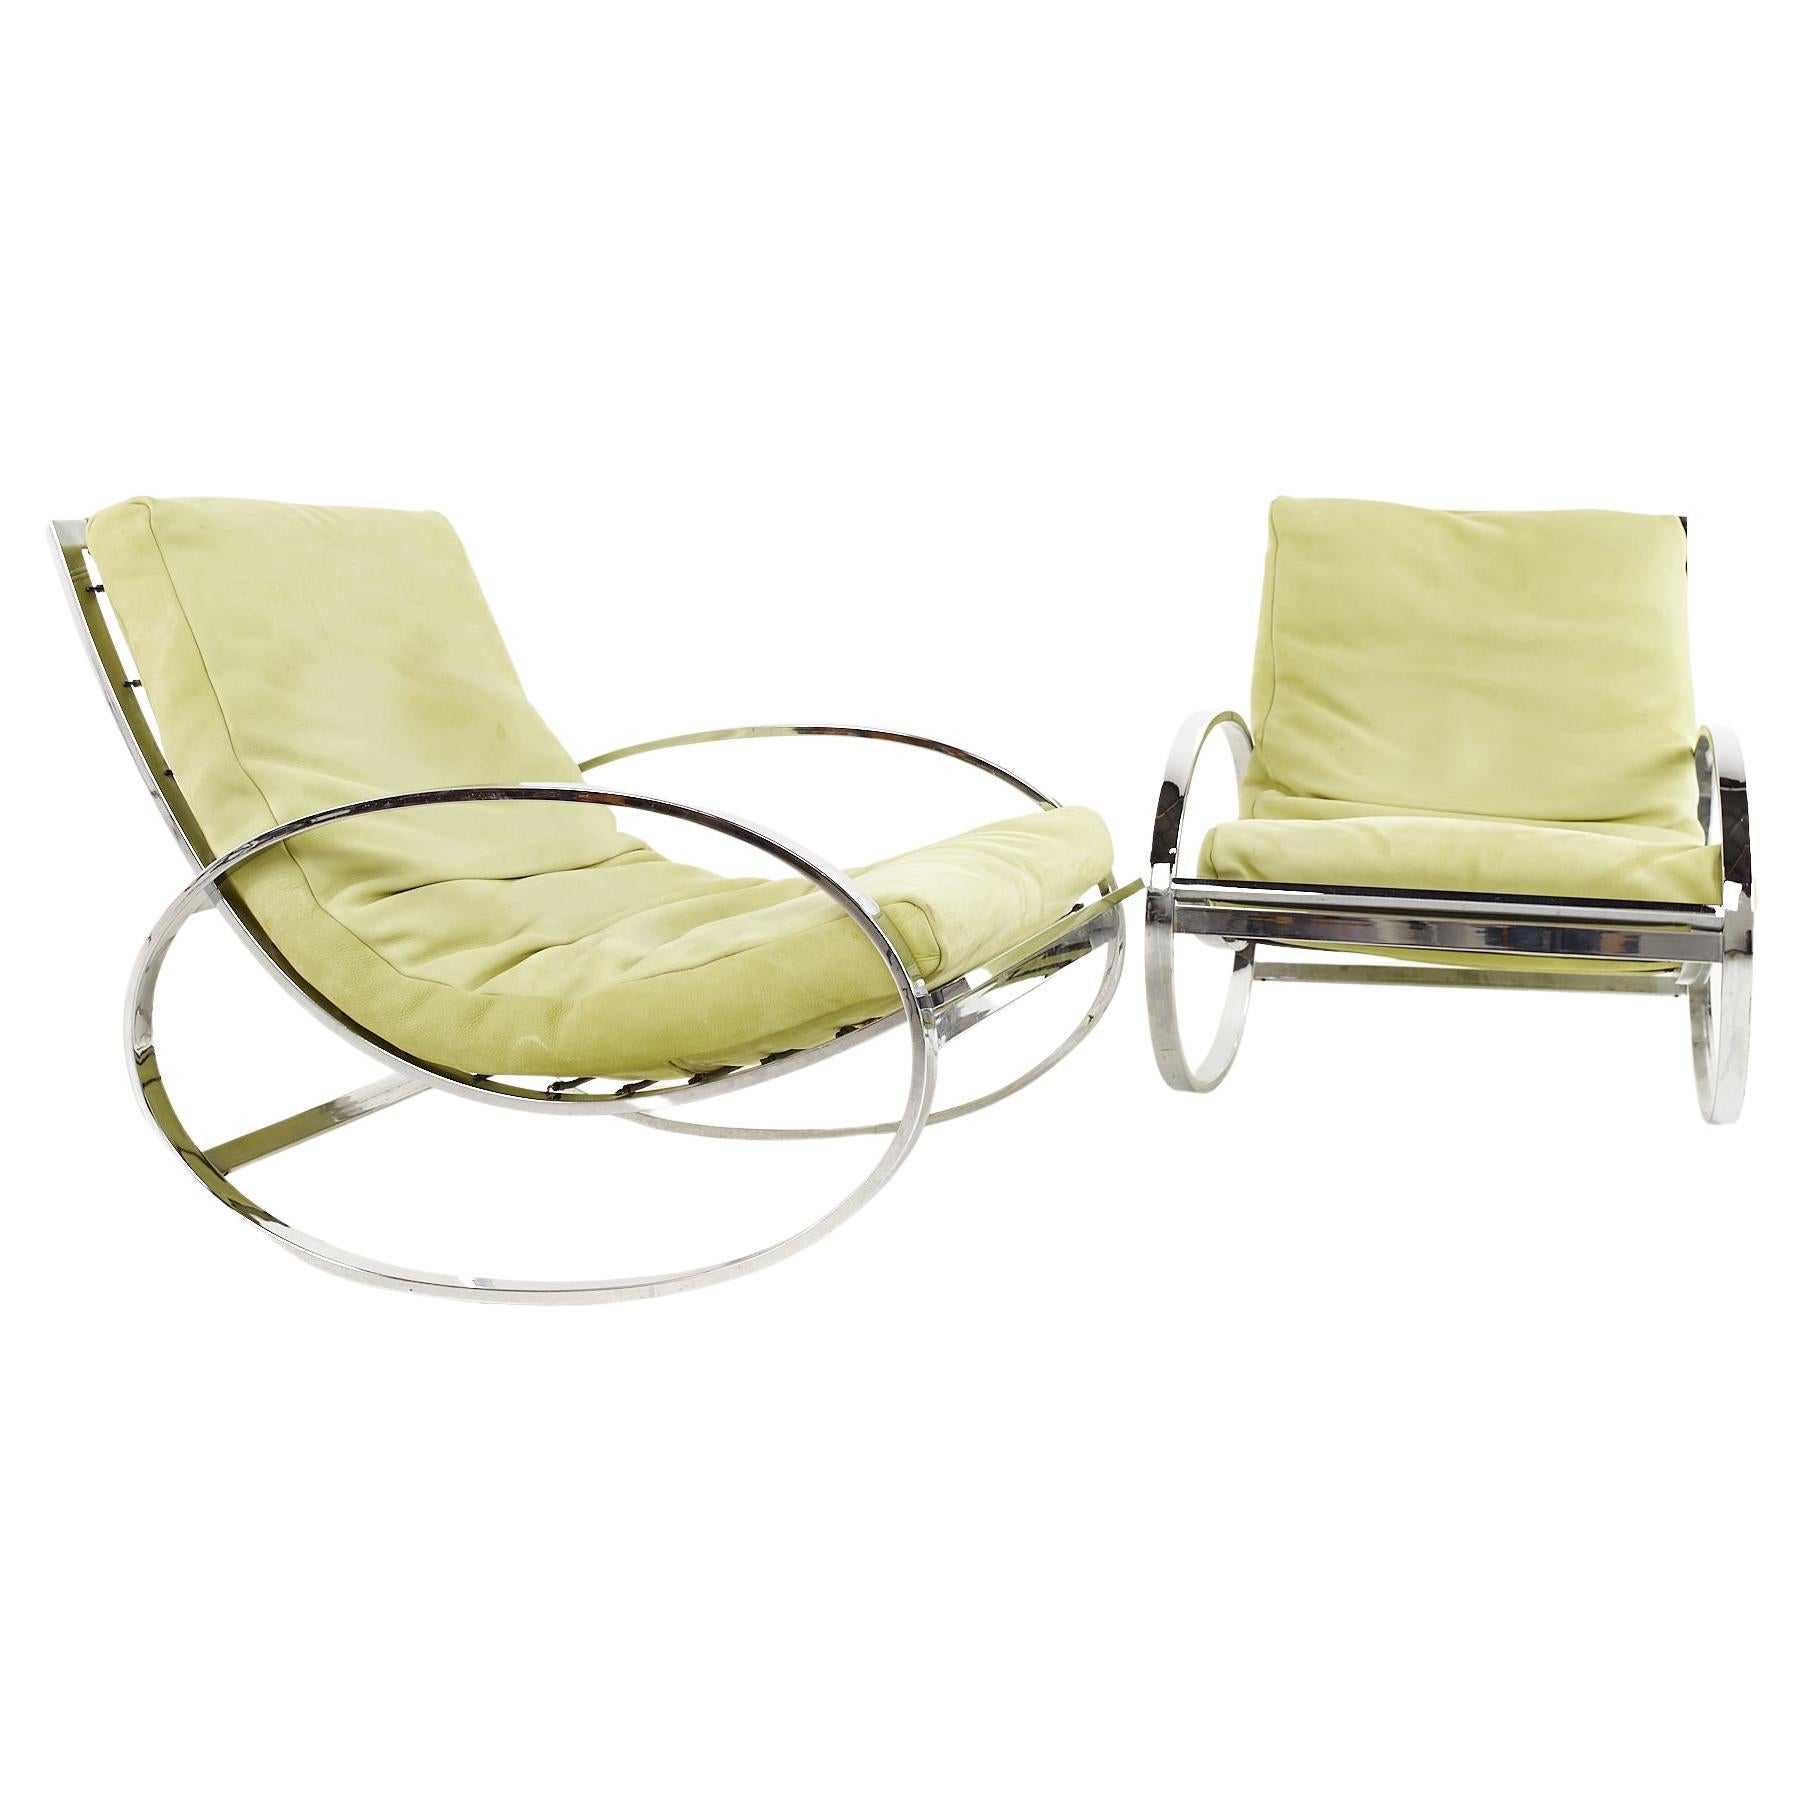 Renato Zevi for Selig Mid Century Chrome Elliptical Rocking Chairs, A Pair